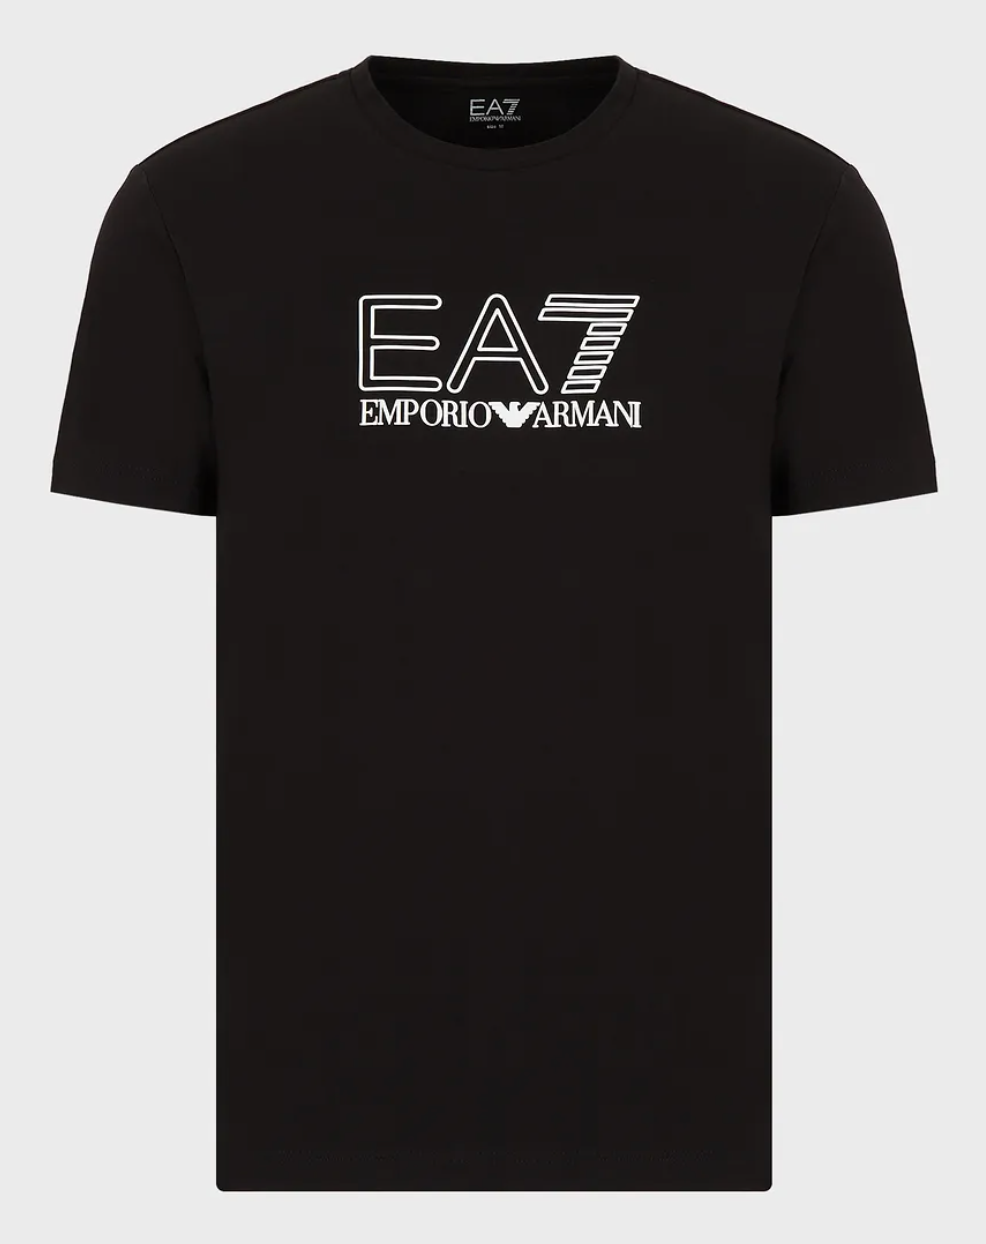 EA7 By Emporio Armani "Fundamental" T-shirt Black